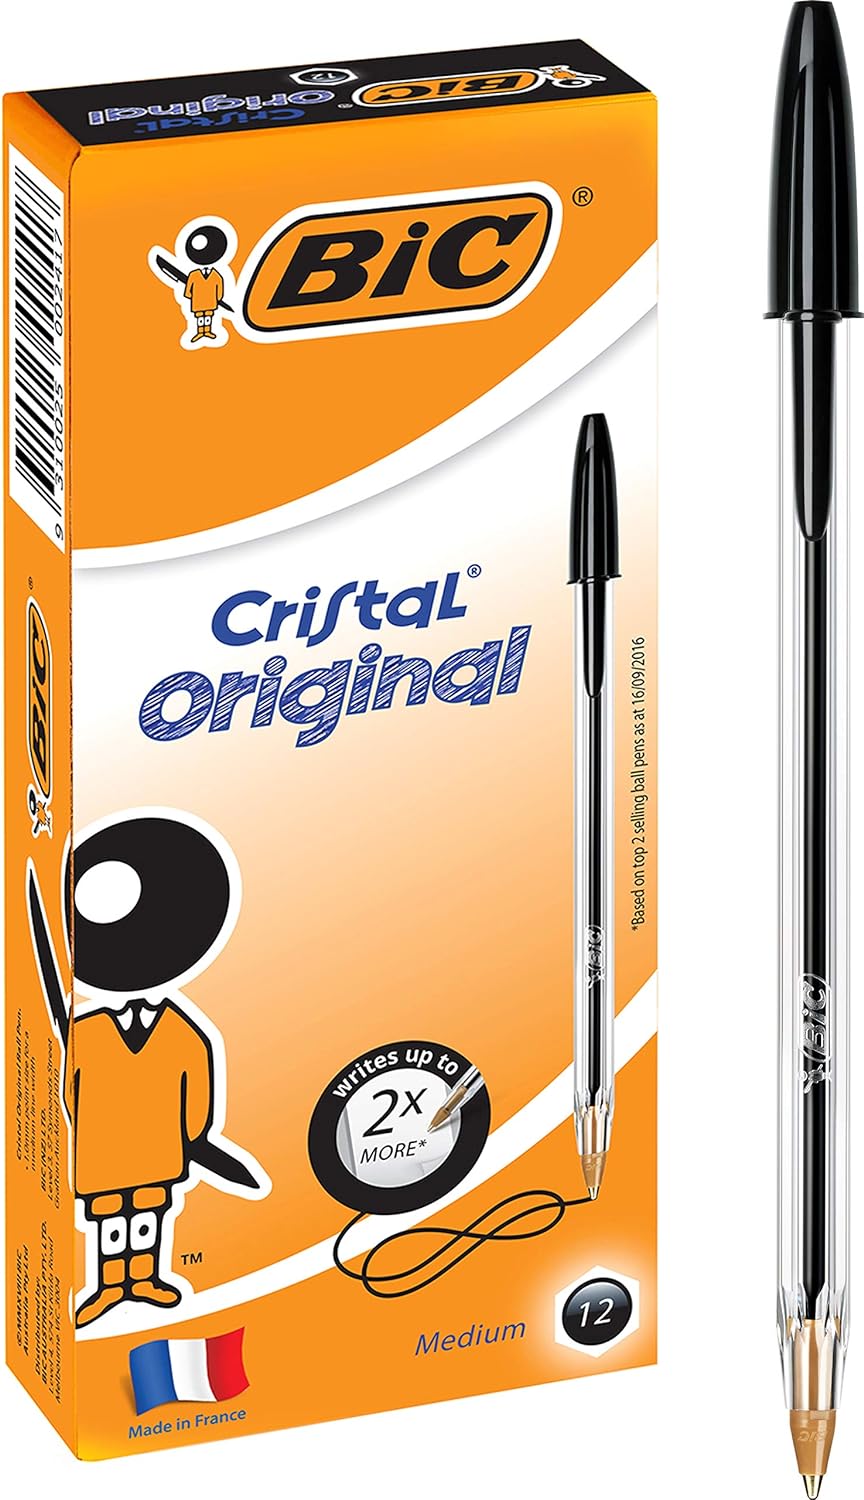 BIC Cristal Original Ballpoint Pens - Medium, Black, Box of 12